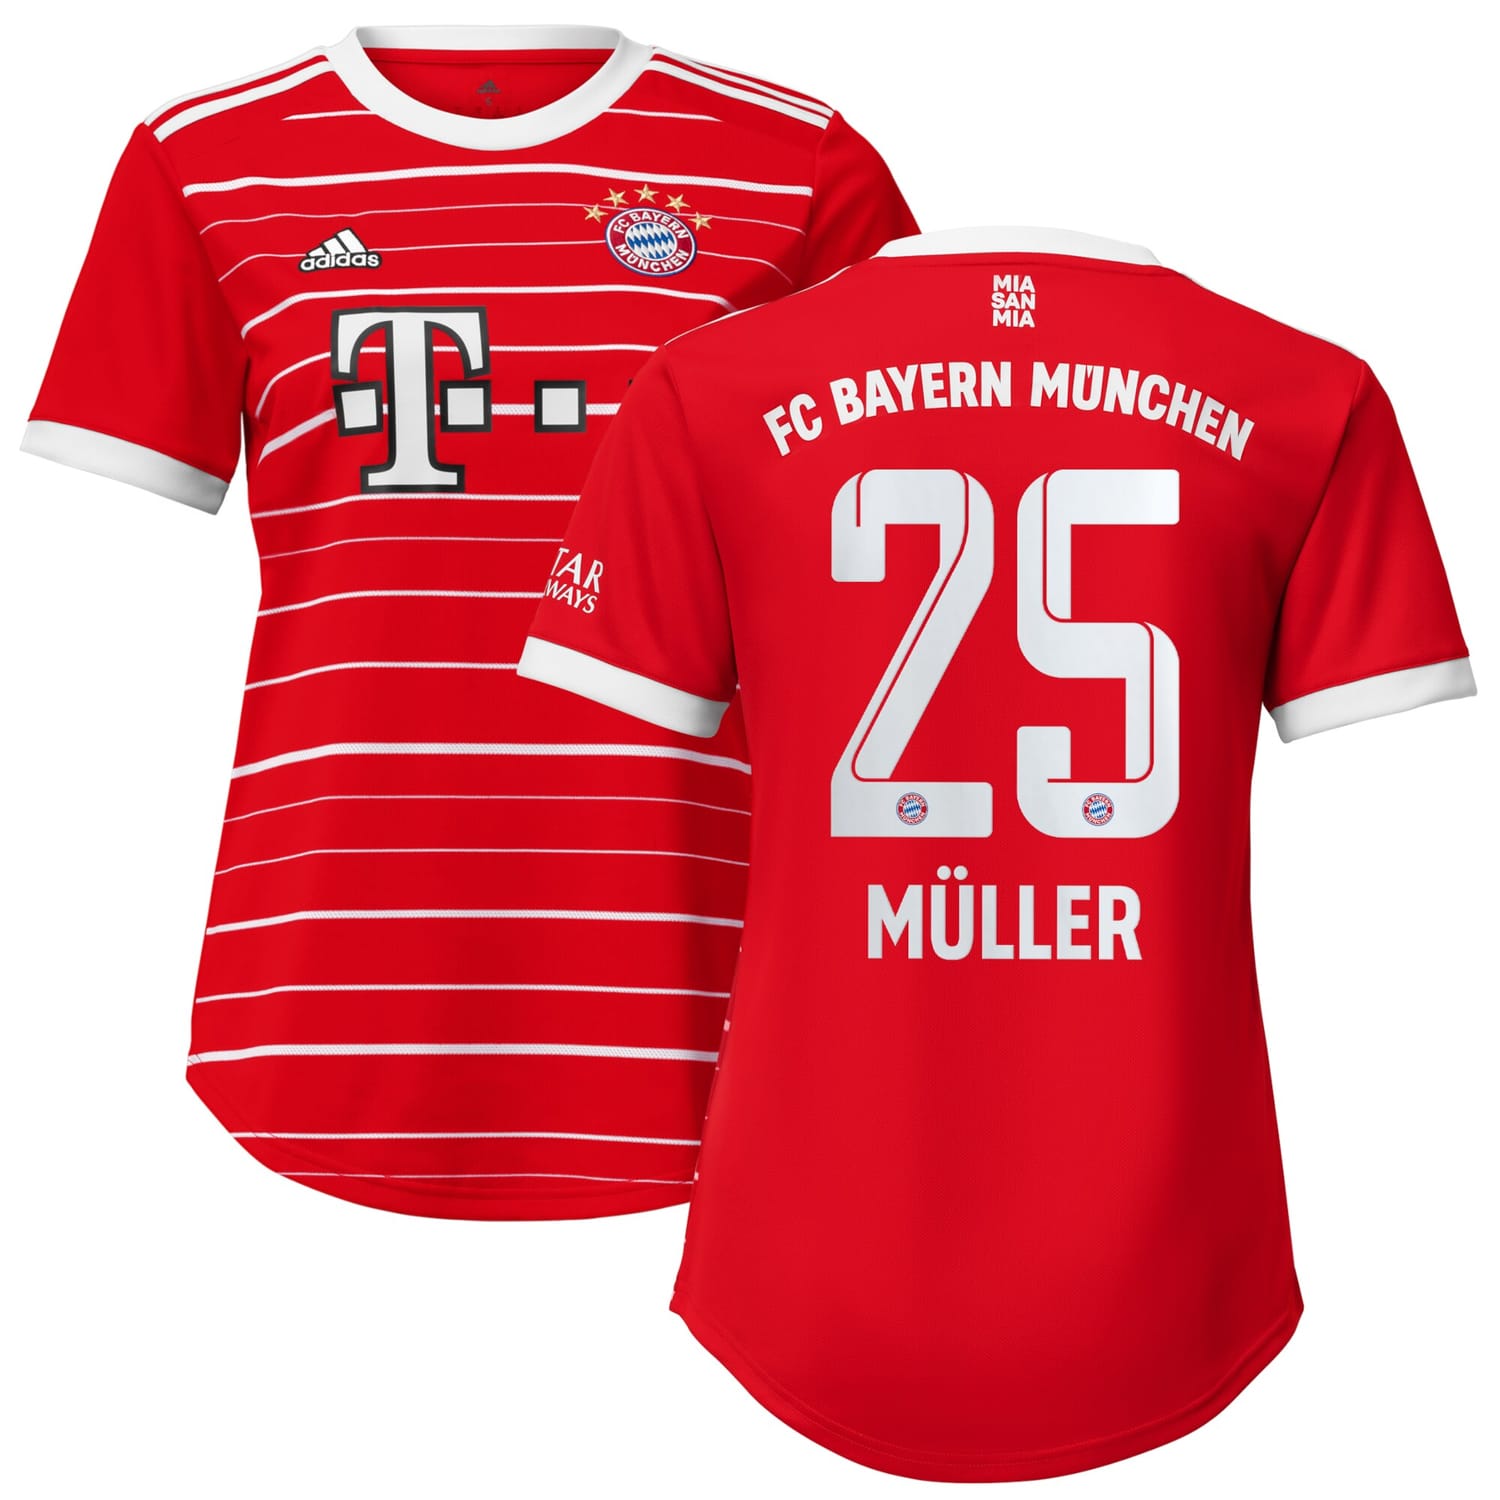 Bundesliga Bayern Munich Home Jersey Shirt Red 2022-23 player Thomas Müller printing for Women